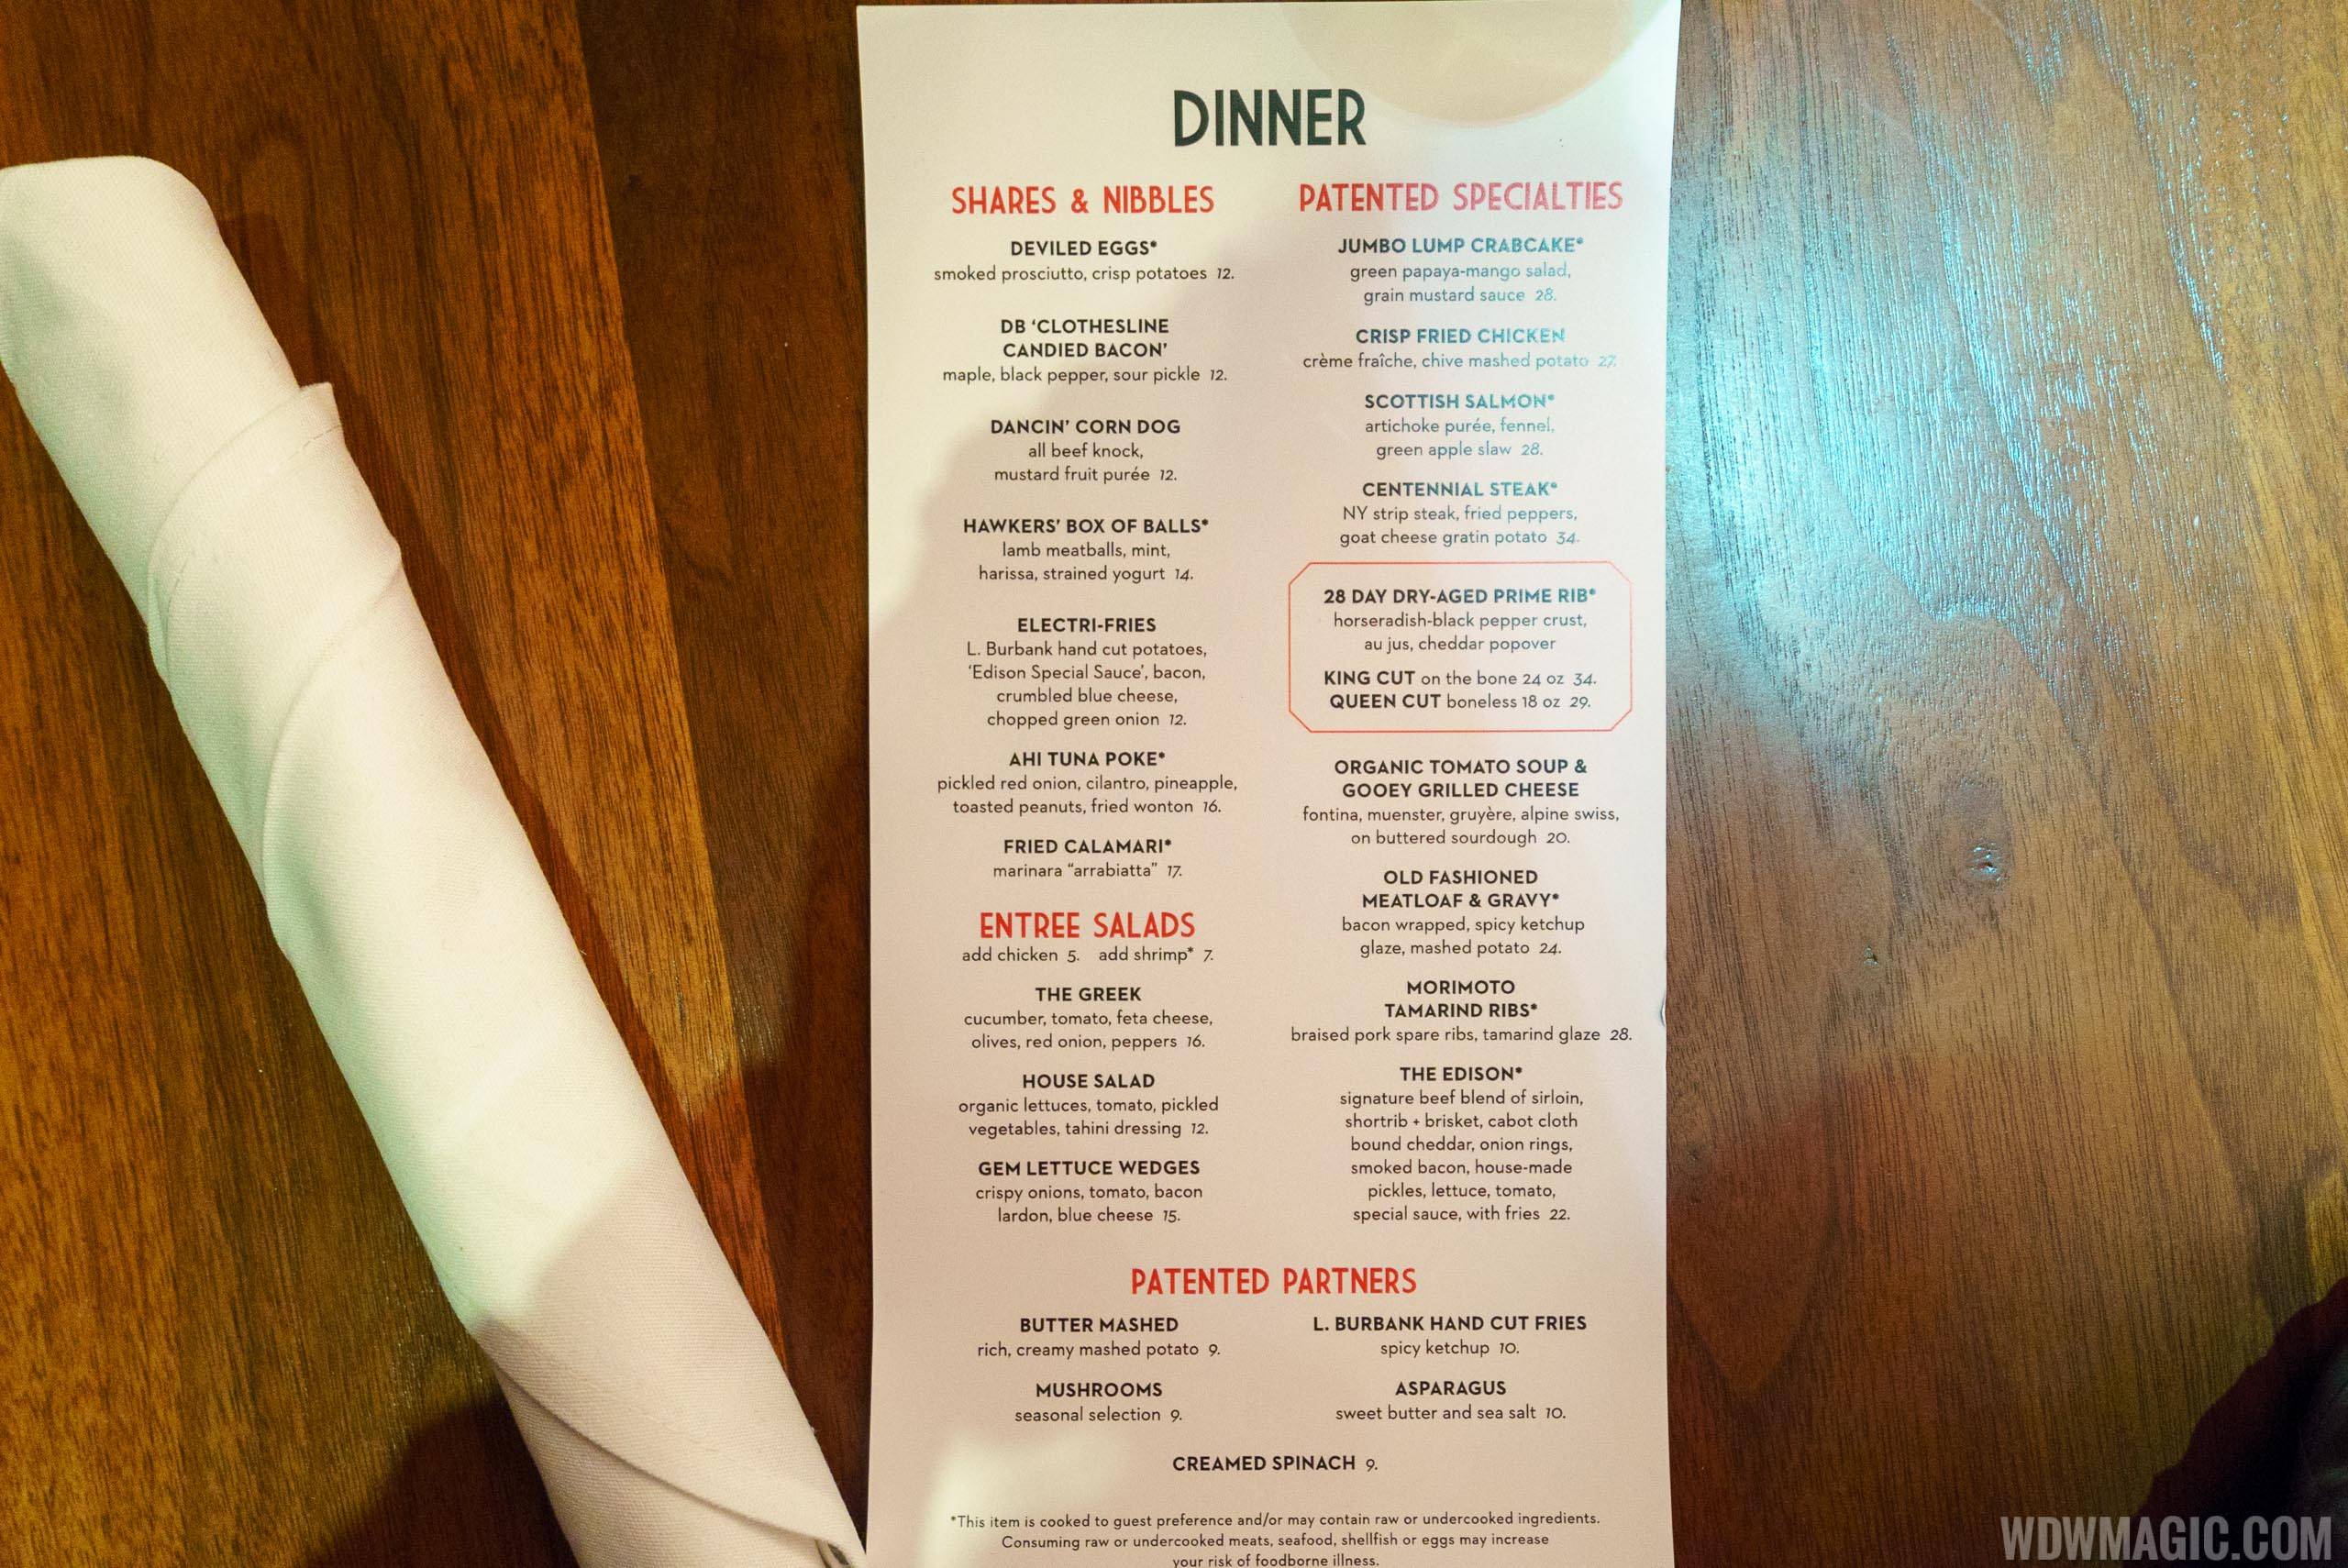 The Edison - Dinner menu